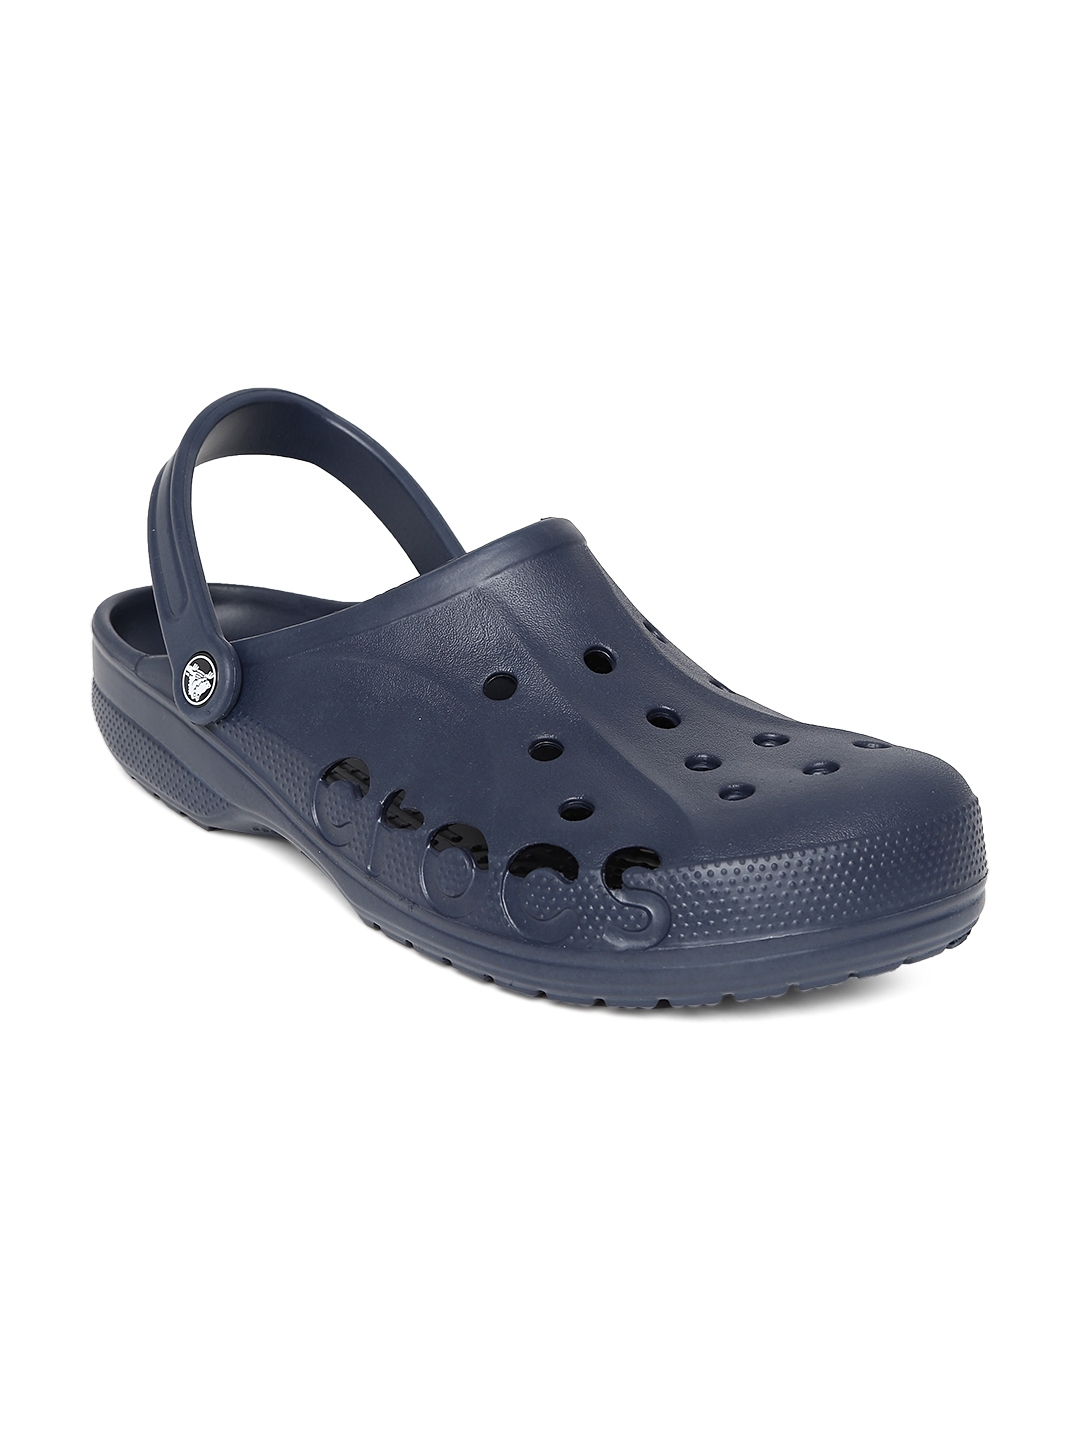 Buy Crocs Baya Unisex Navy Clogs - Flip Flops for Unisex 719922 | Myntra